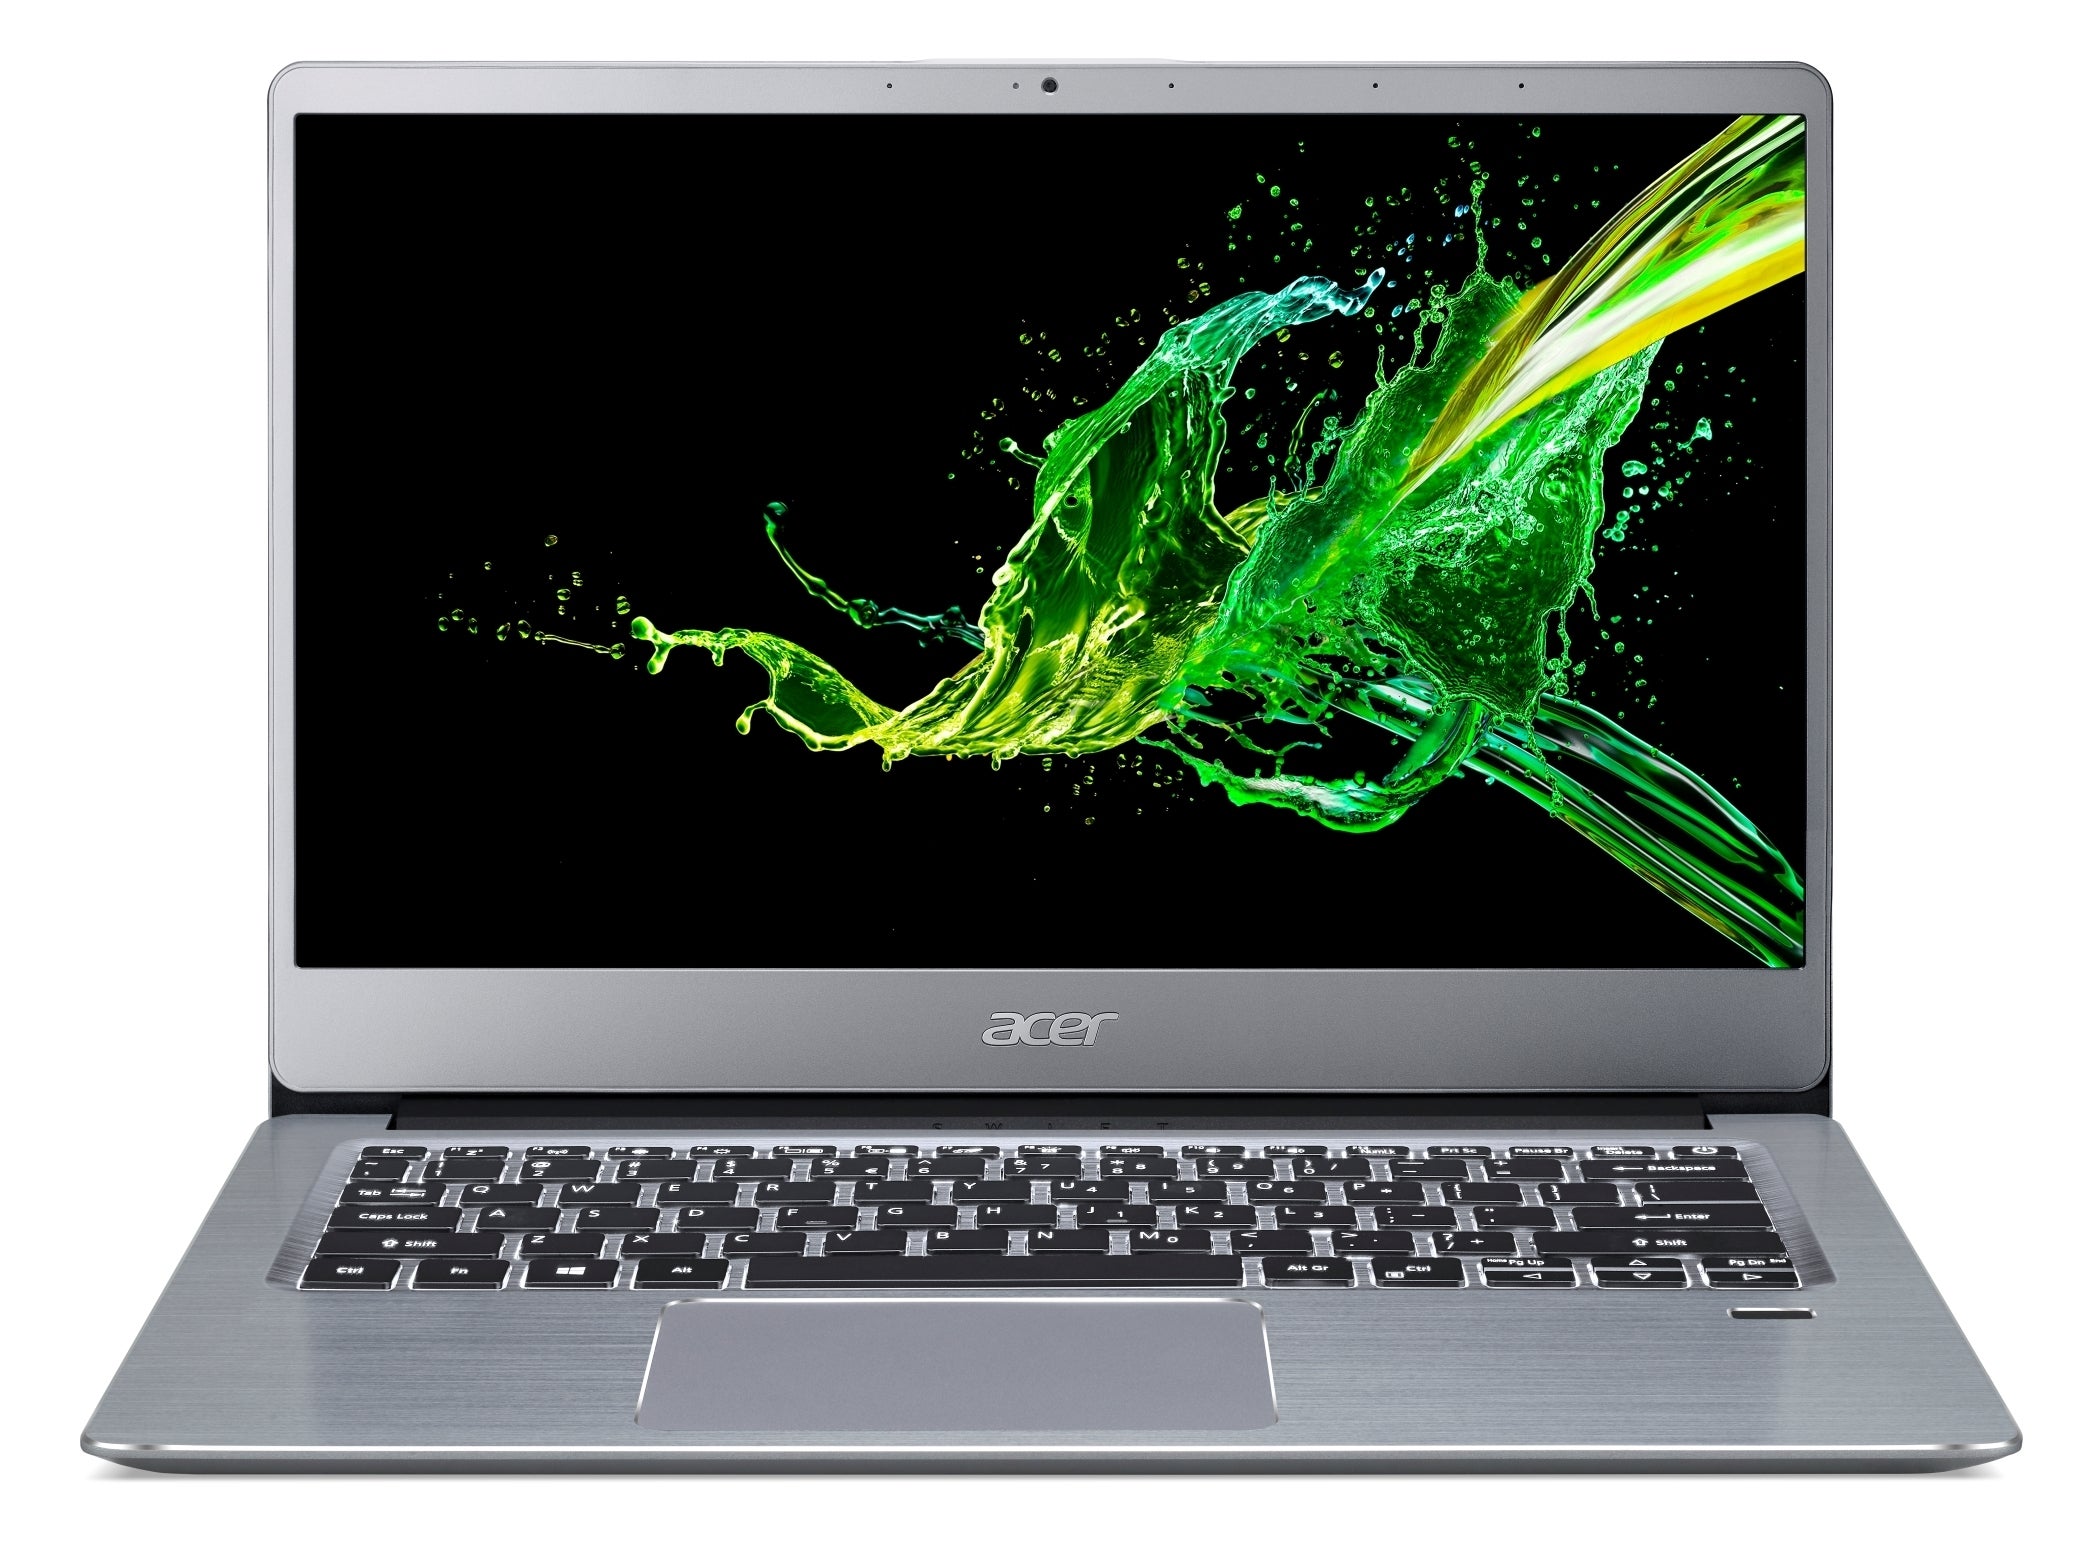 Acer's latest laptops go allAMD with Ryzen and Radeon inside PCWorld